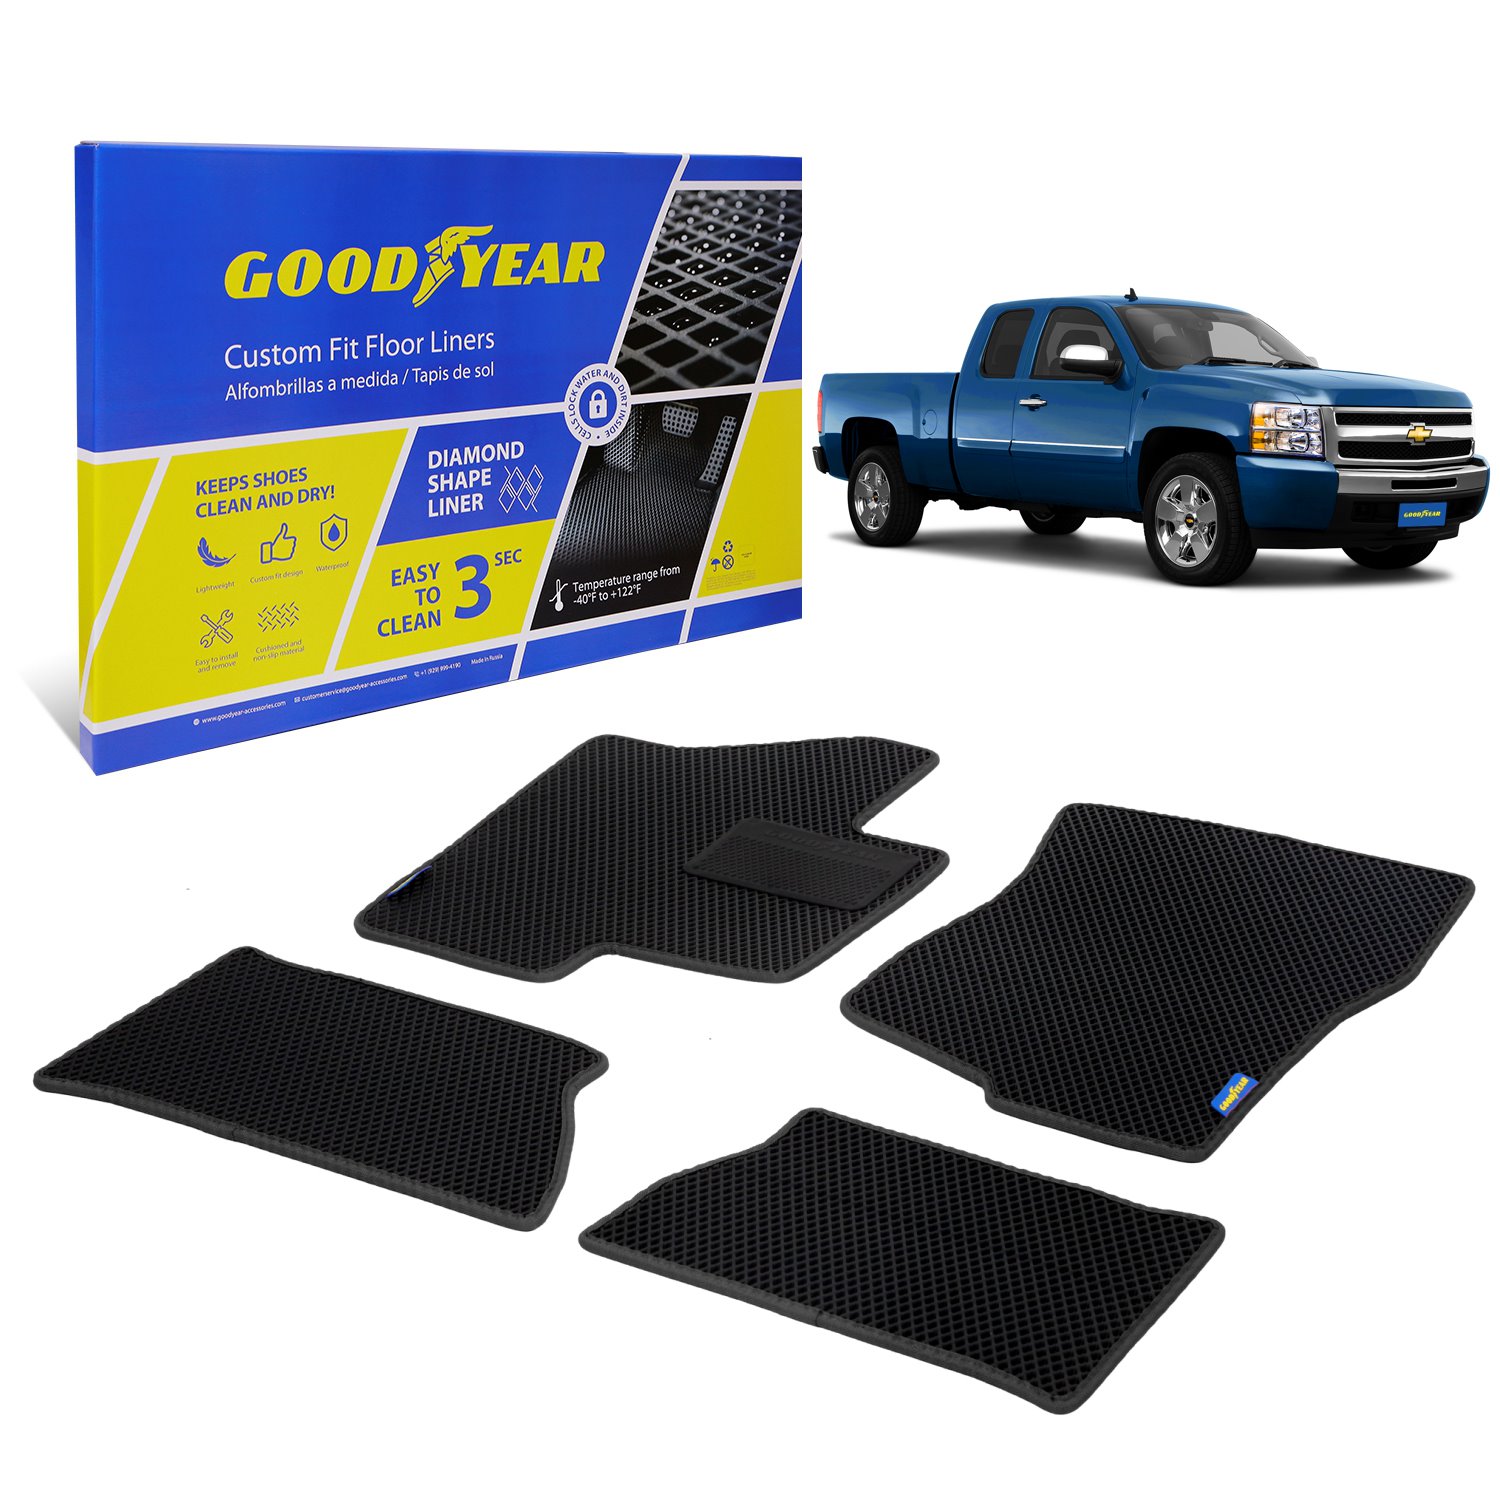 Goodyear Custom-Fit Floor Liners for 2007-2013 Chevrolet Silverado/GMC Sierra 1500 Extended Cab